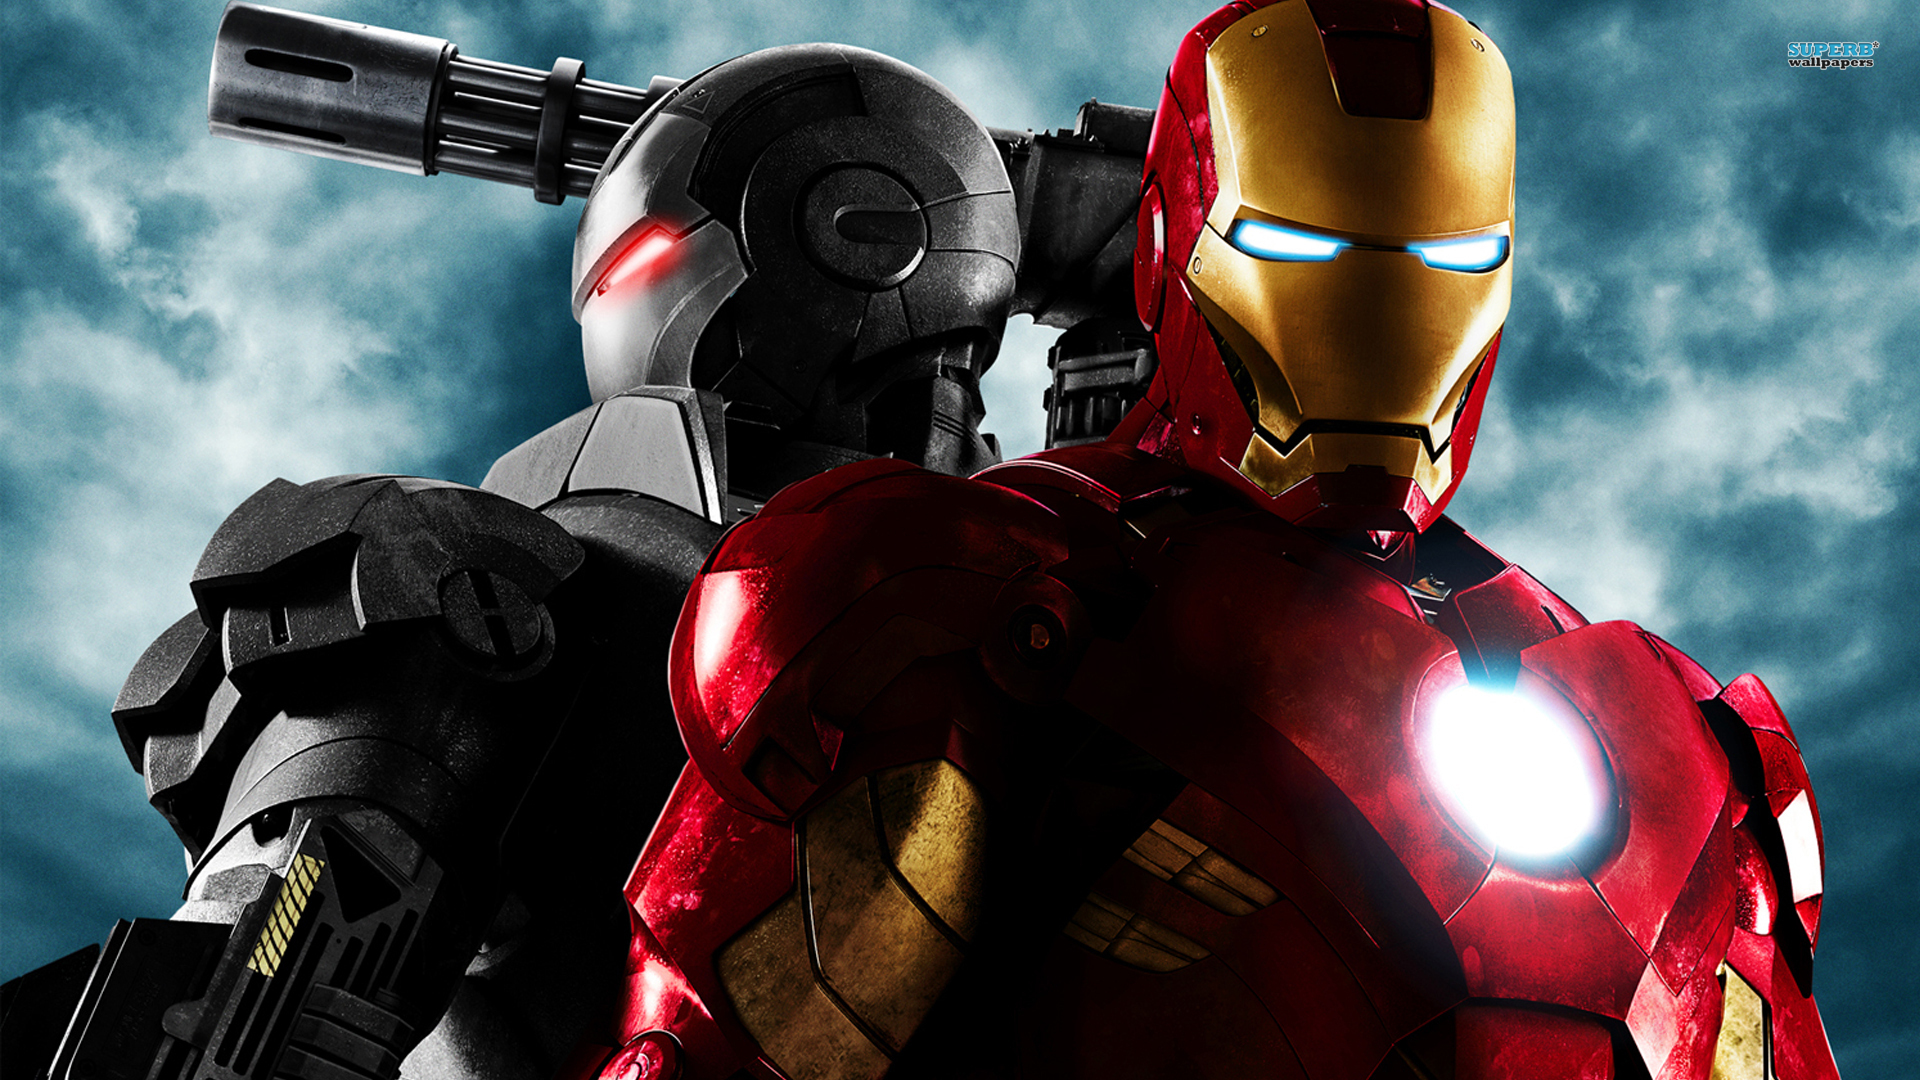 Iron Man Avengers Wallpaper High Quality Resolution - Ndemok.com